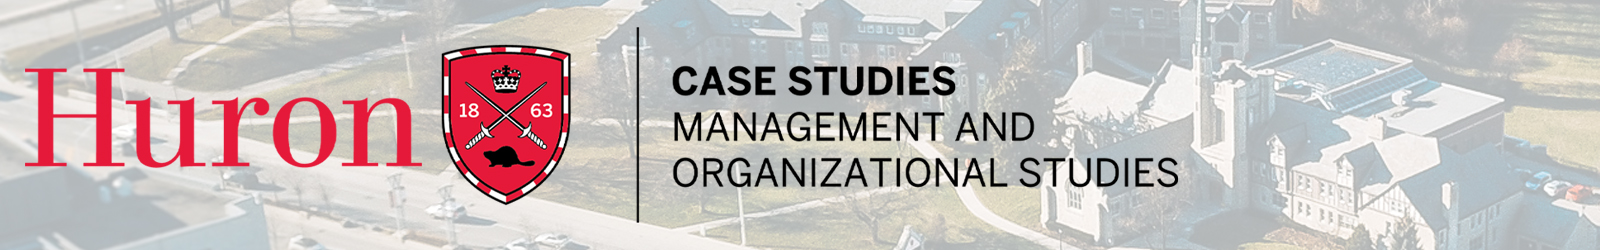 Management and Organizational Studies Header Image